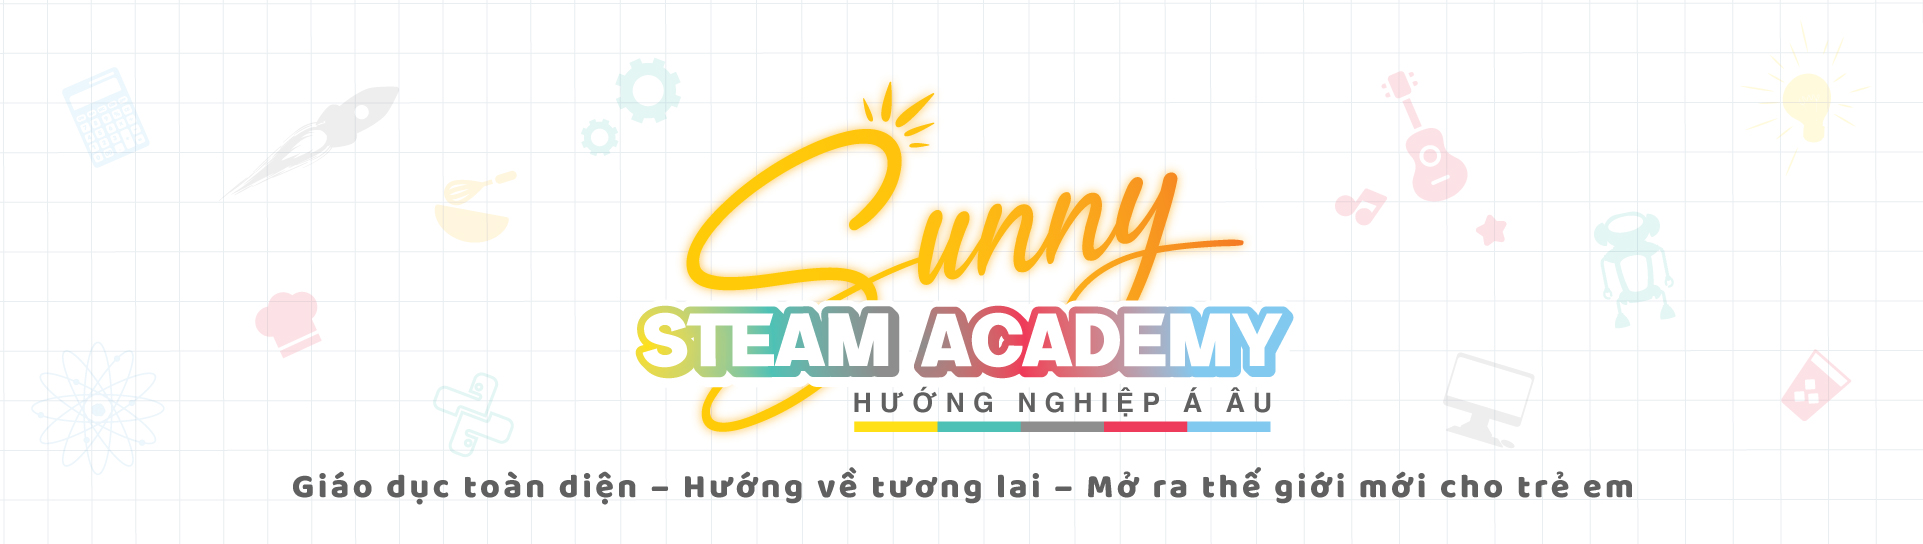 sunny steam academy banner pc